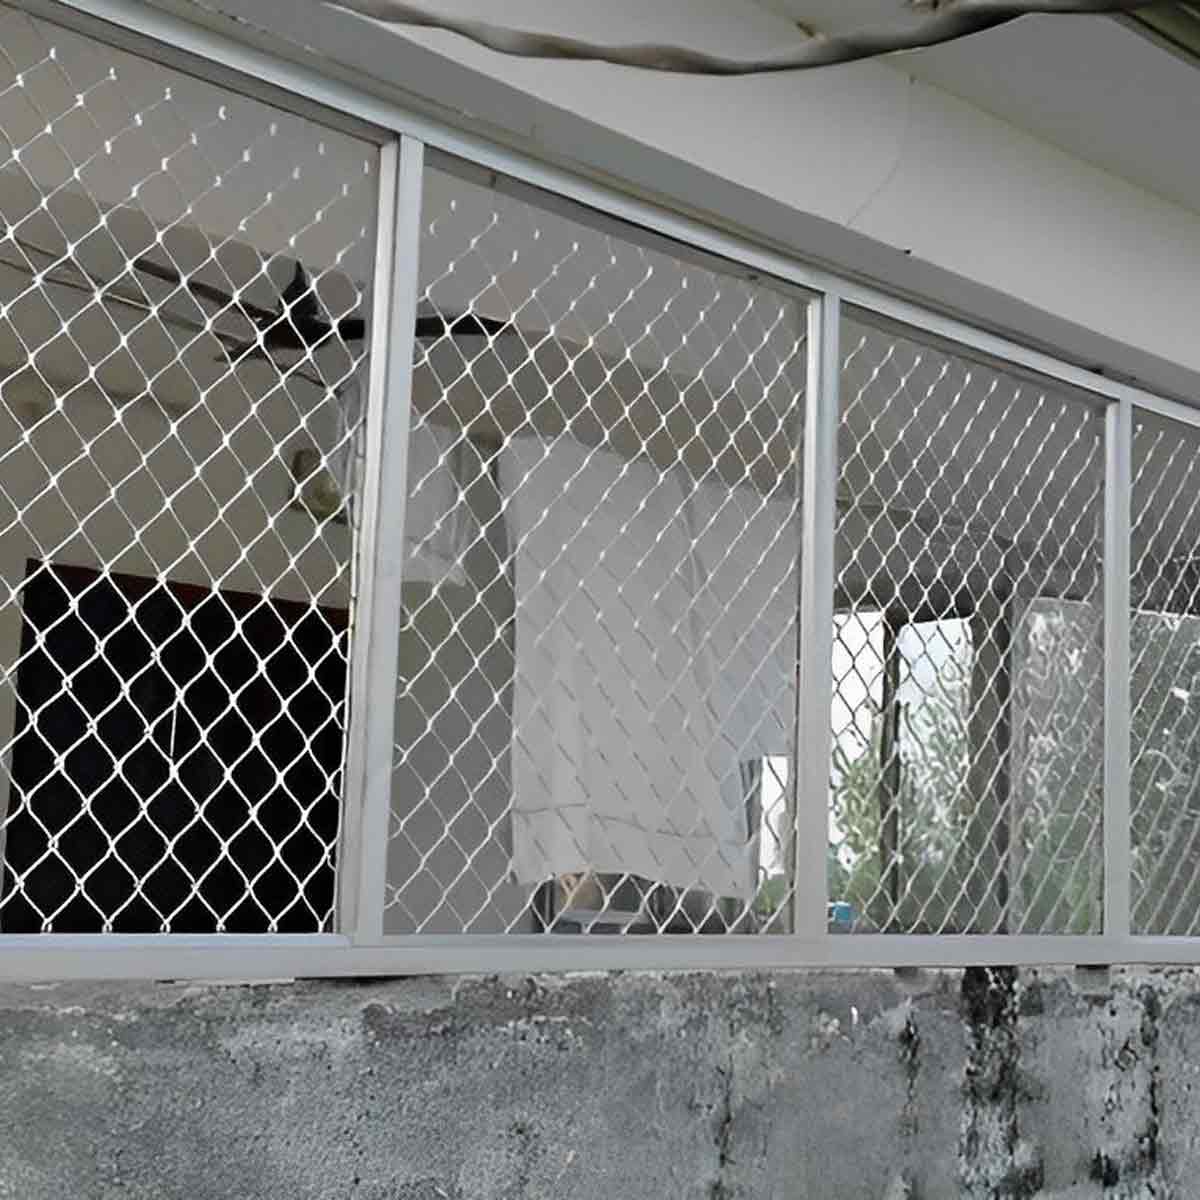 Aluminium Balcony Grills For Residential Manufacturers, Suppliers in Ichalkaranji